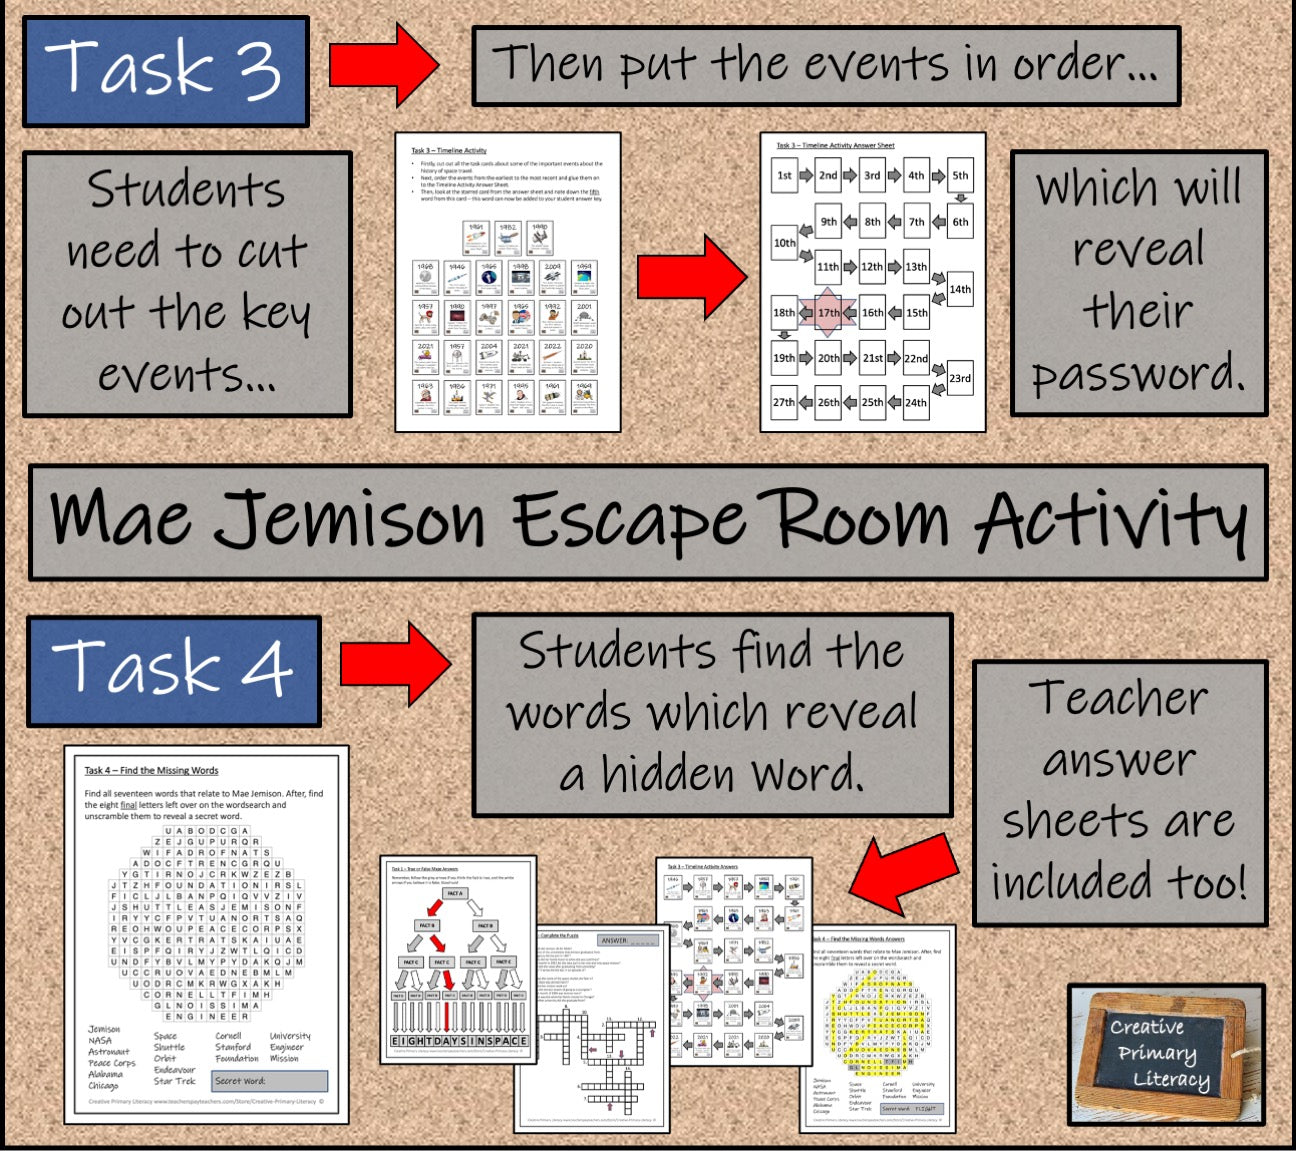 Mae Jemison Escape Room Activity